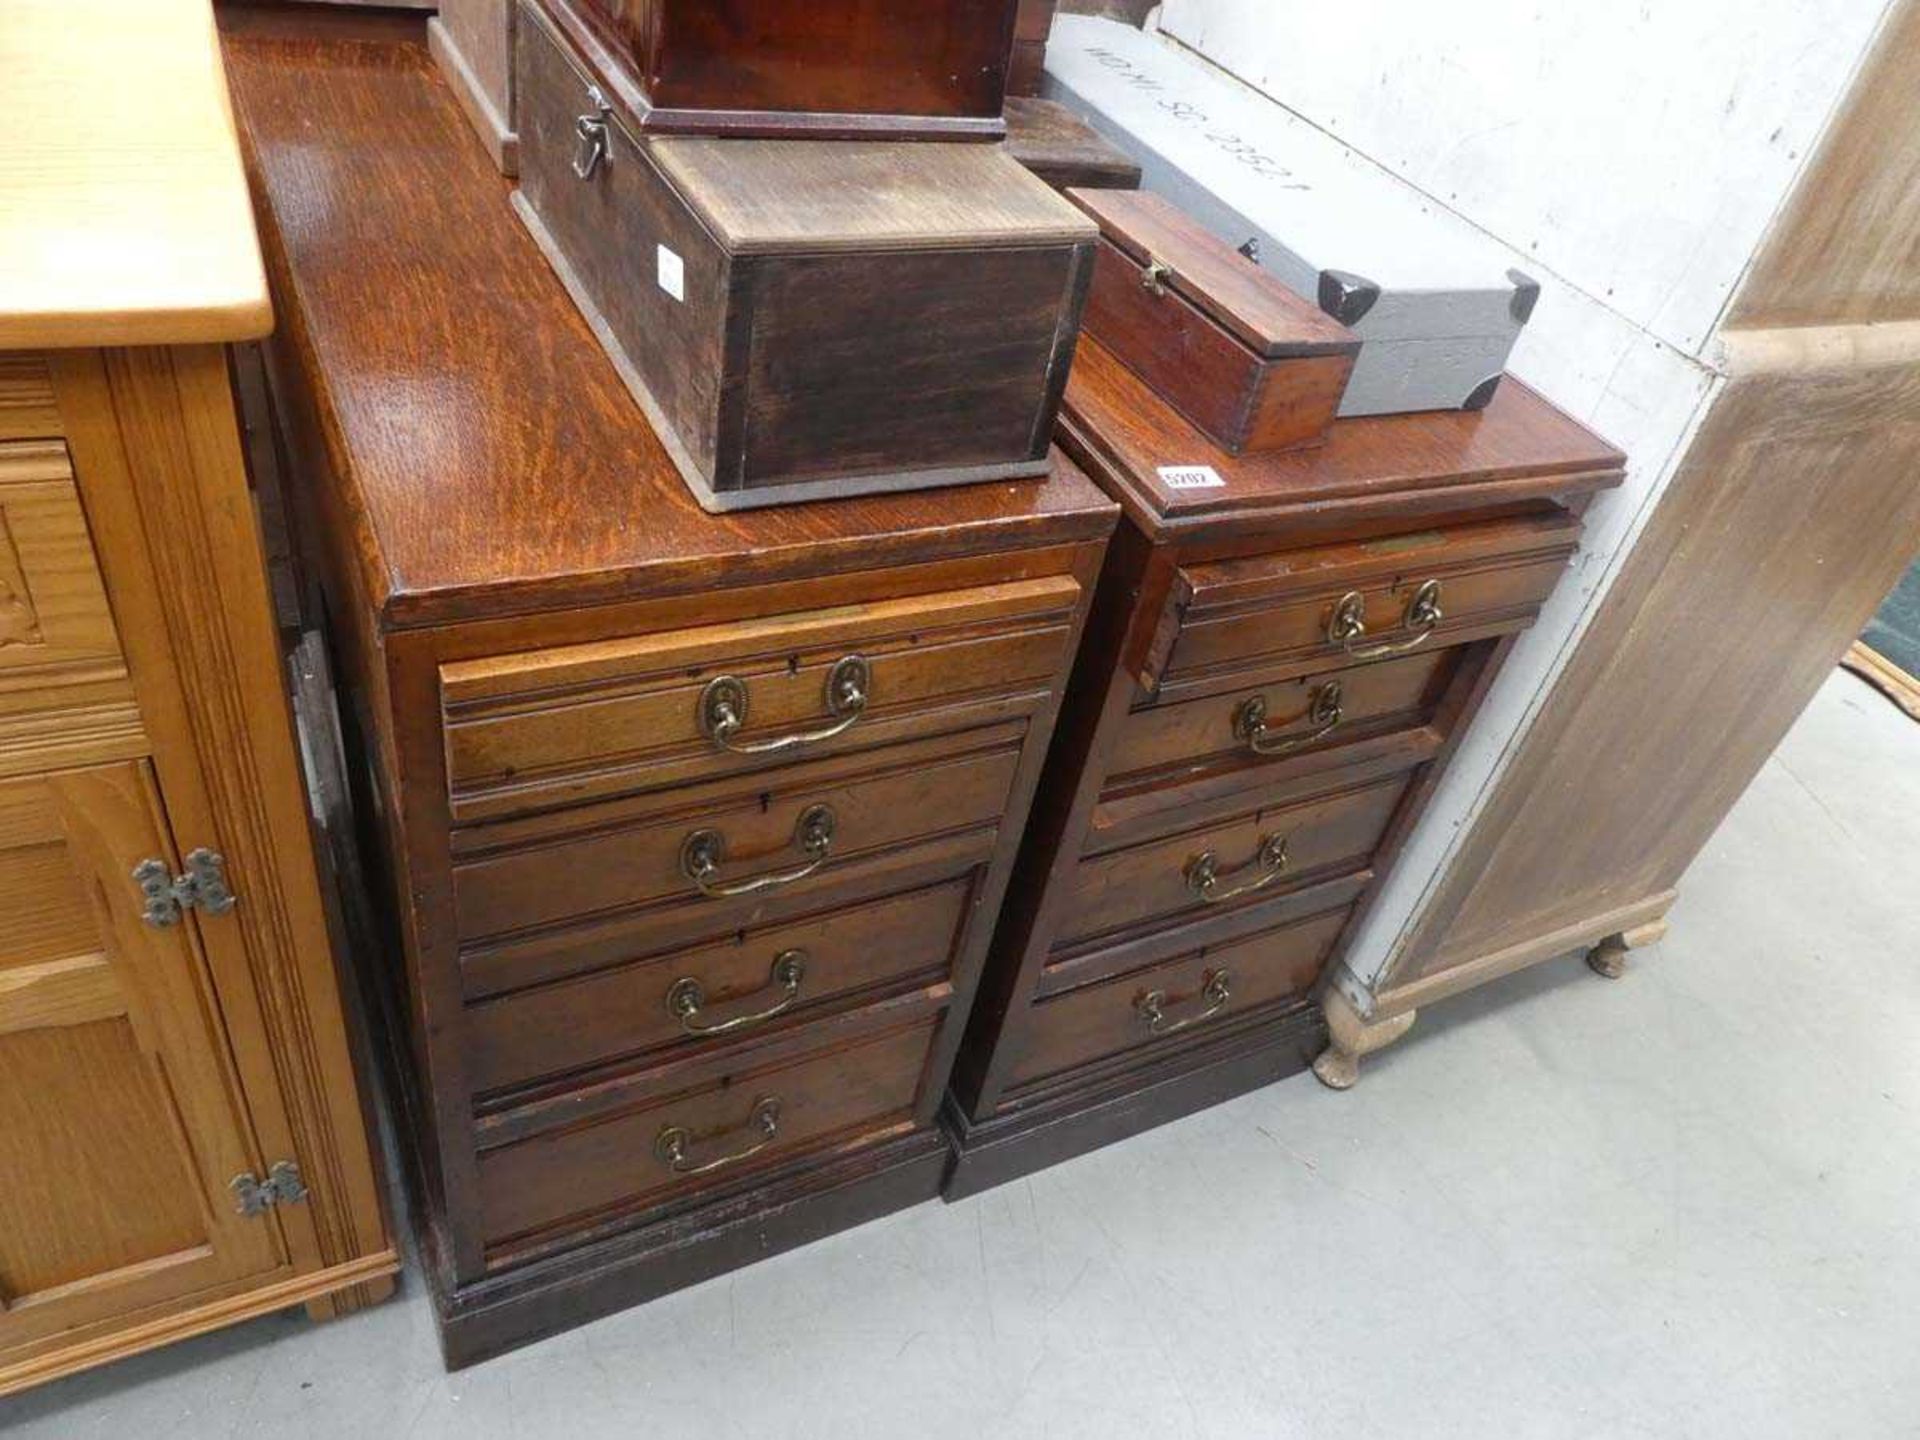 Pair of 4 drawer pedestals